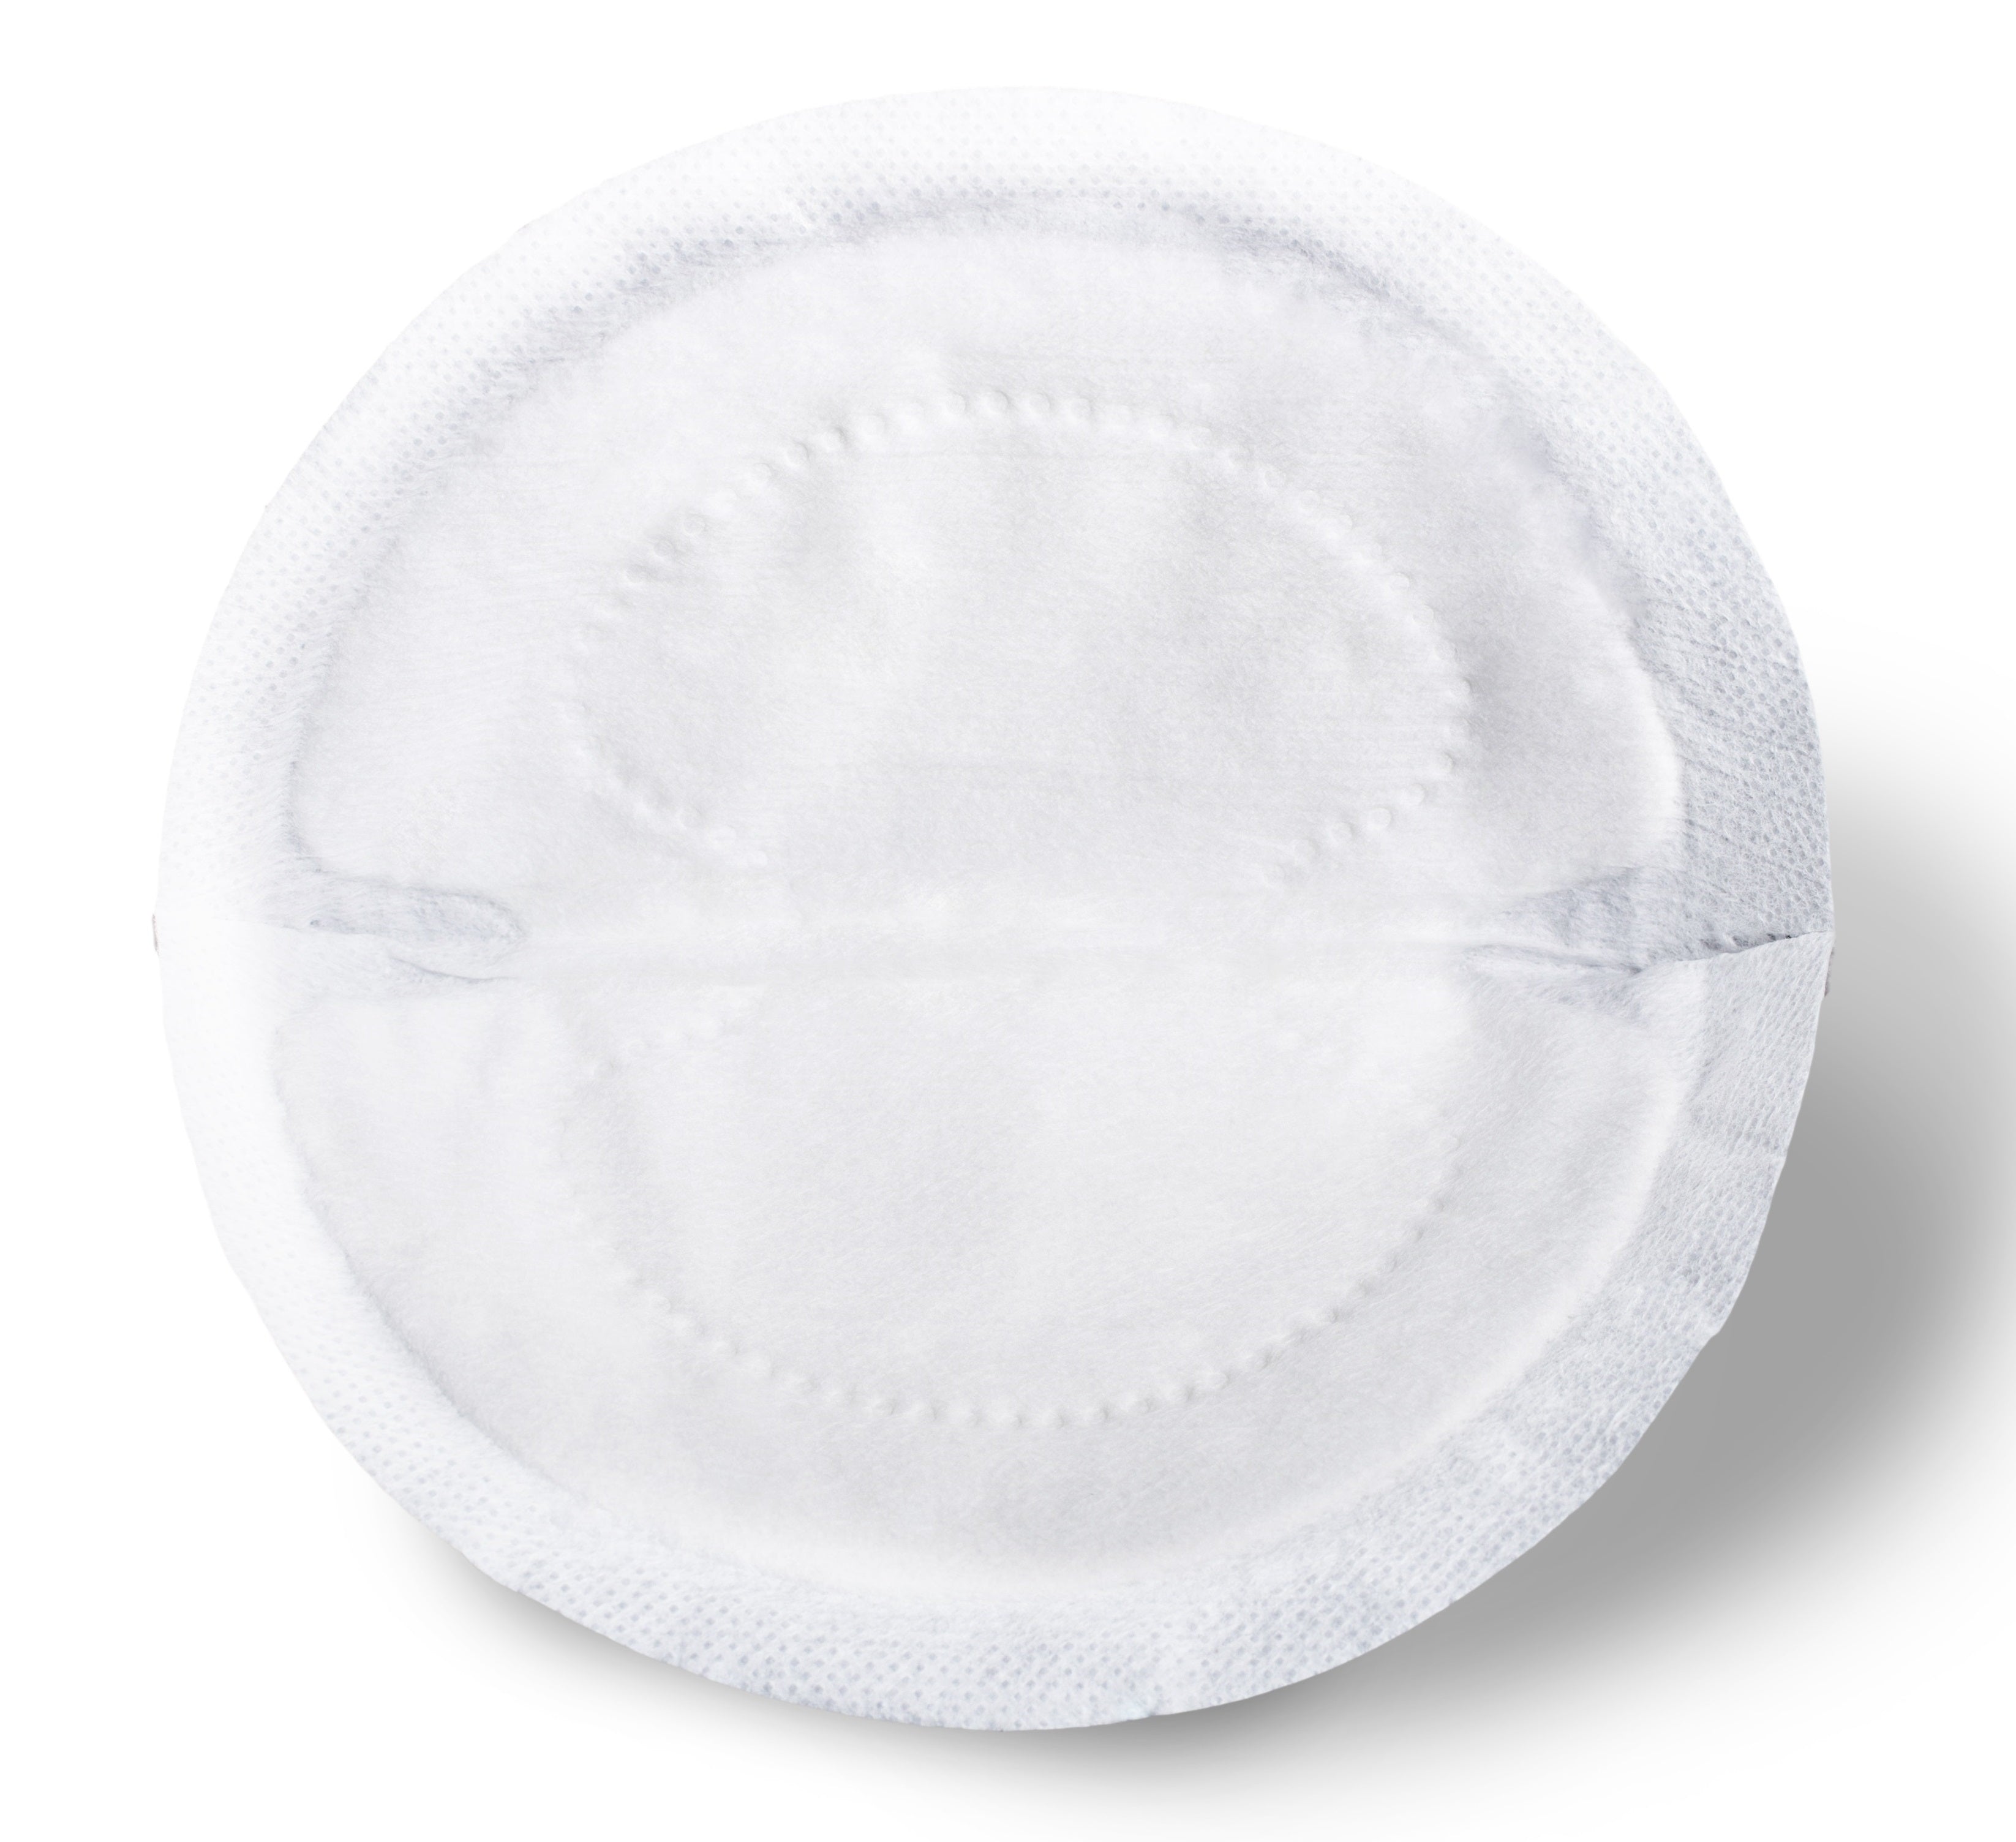 WALFRONT 6pcs Washable Reusable Soft Cotton Breast Pads Absorbent  Breastfeeding Nursing Pad, Washable Nursing Pad, Nursing Pad